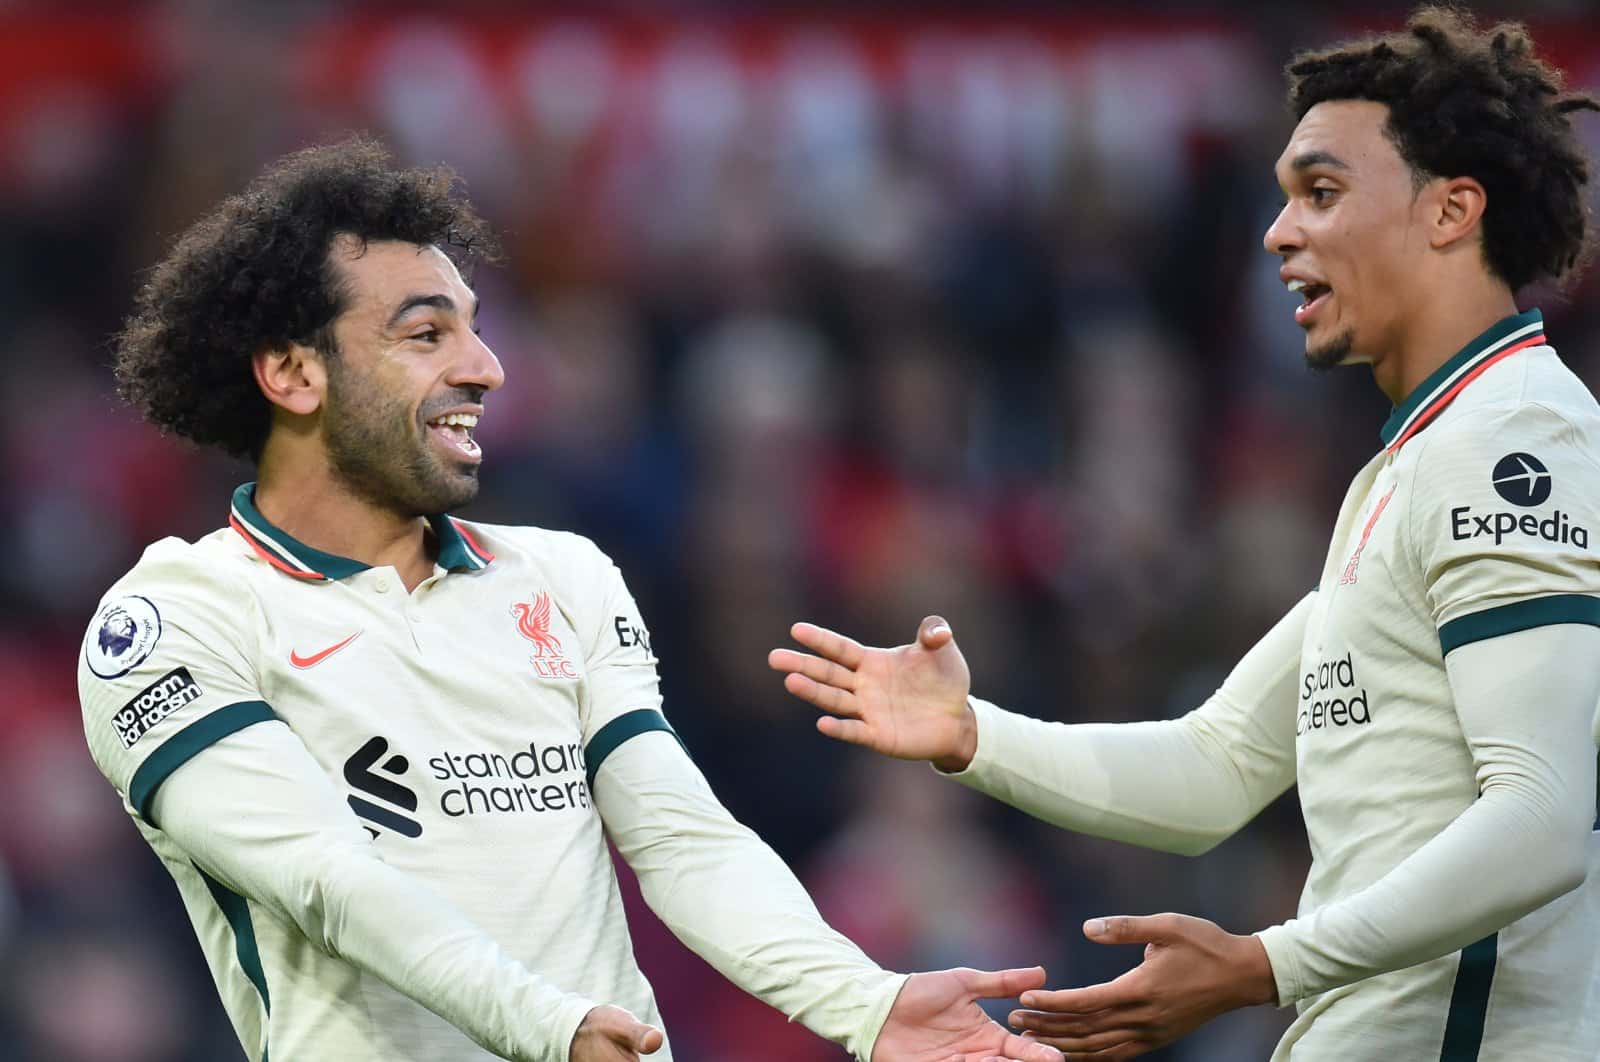 Salah hit hat trick as Liverpool thrashes Man Utd at Old Trafford